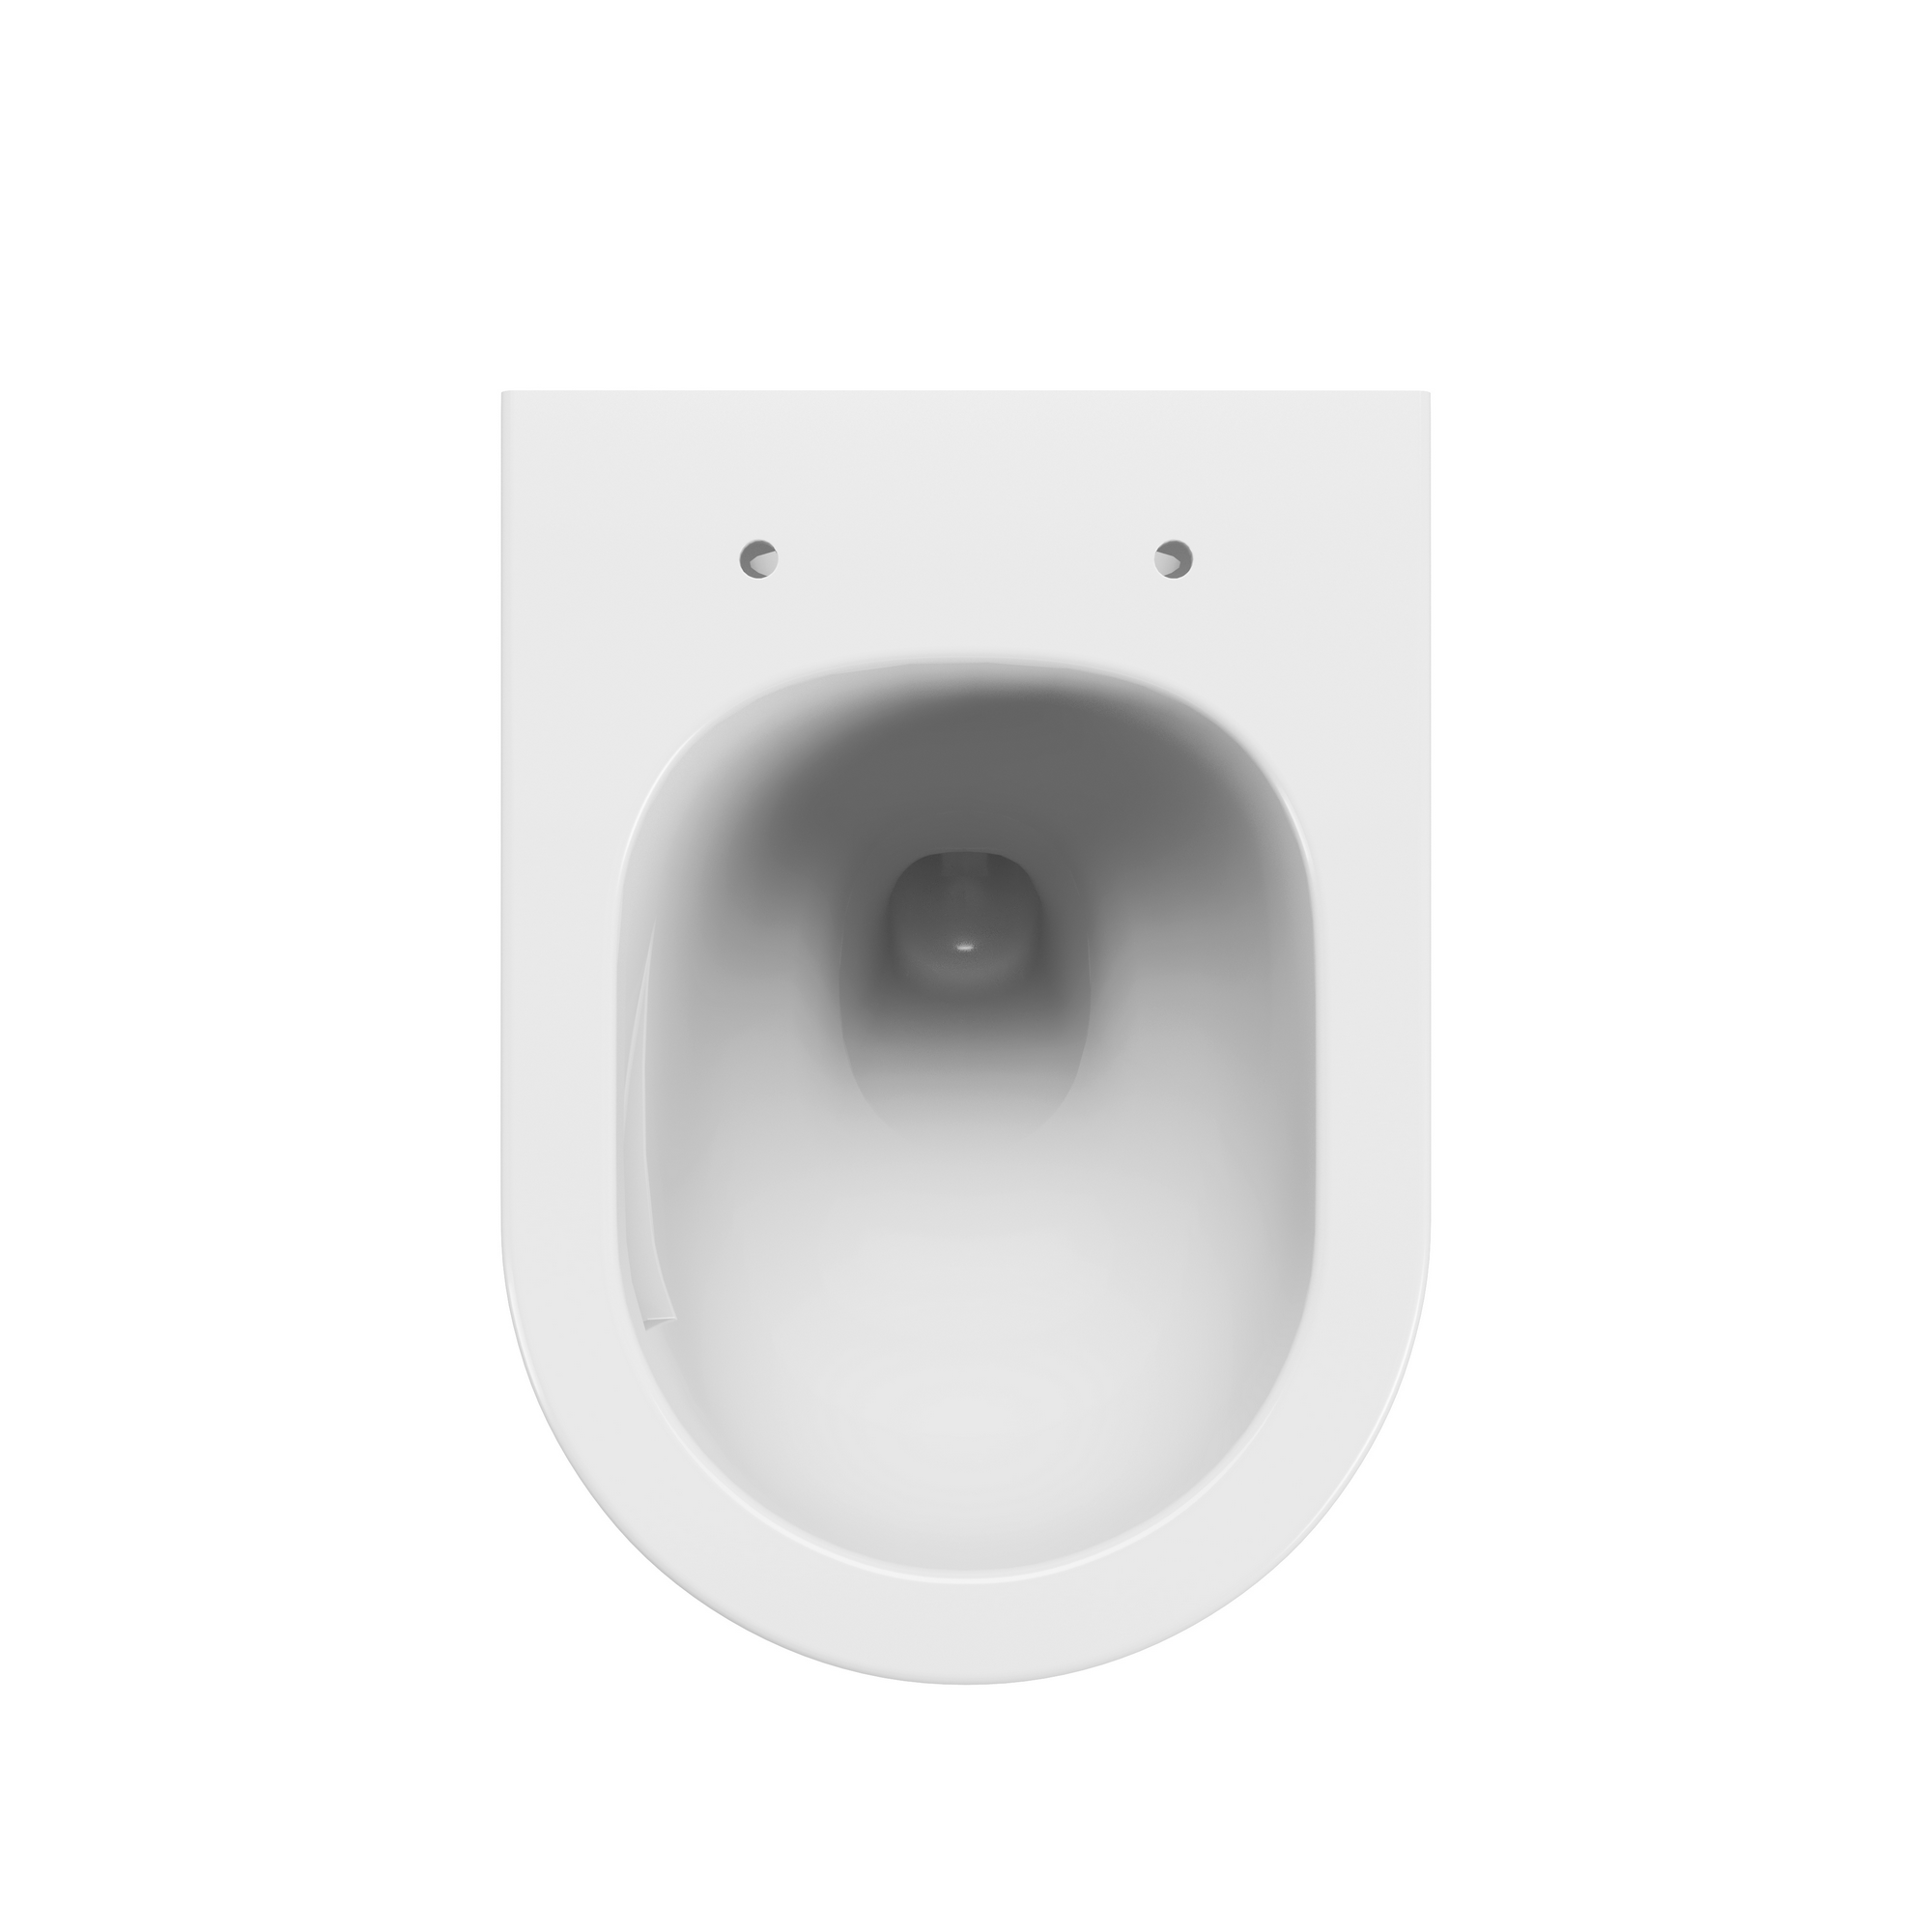 Wand-WC 'Saranda pure rimless' Keramik weiß 50 x 36 x 36 cm + product picture